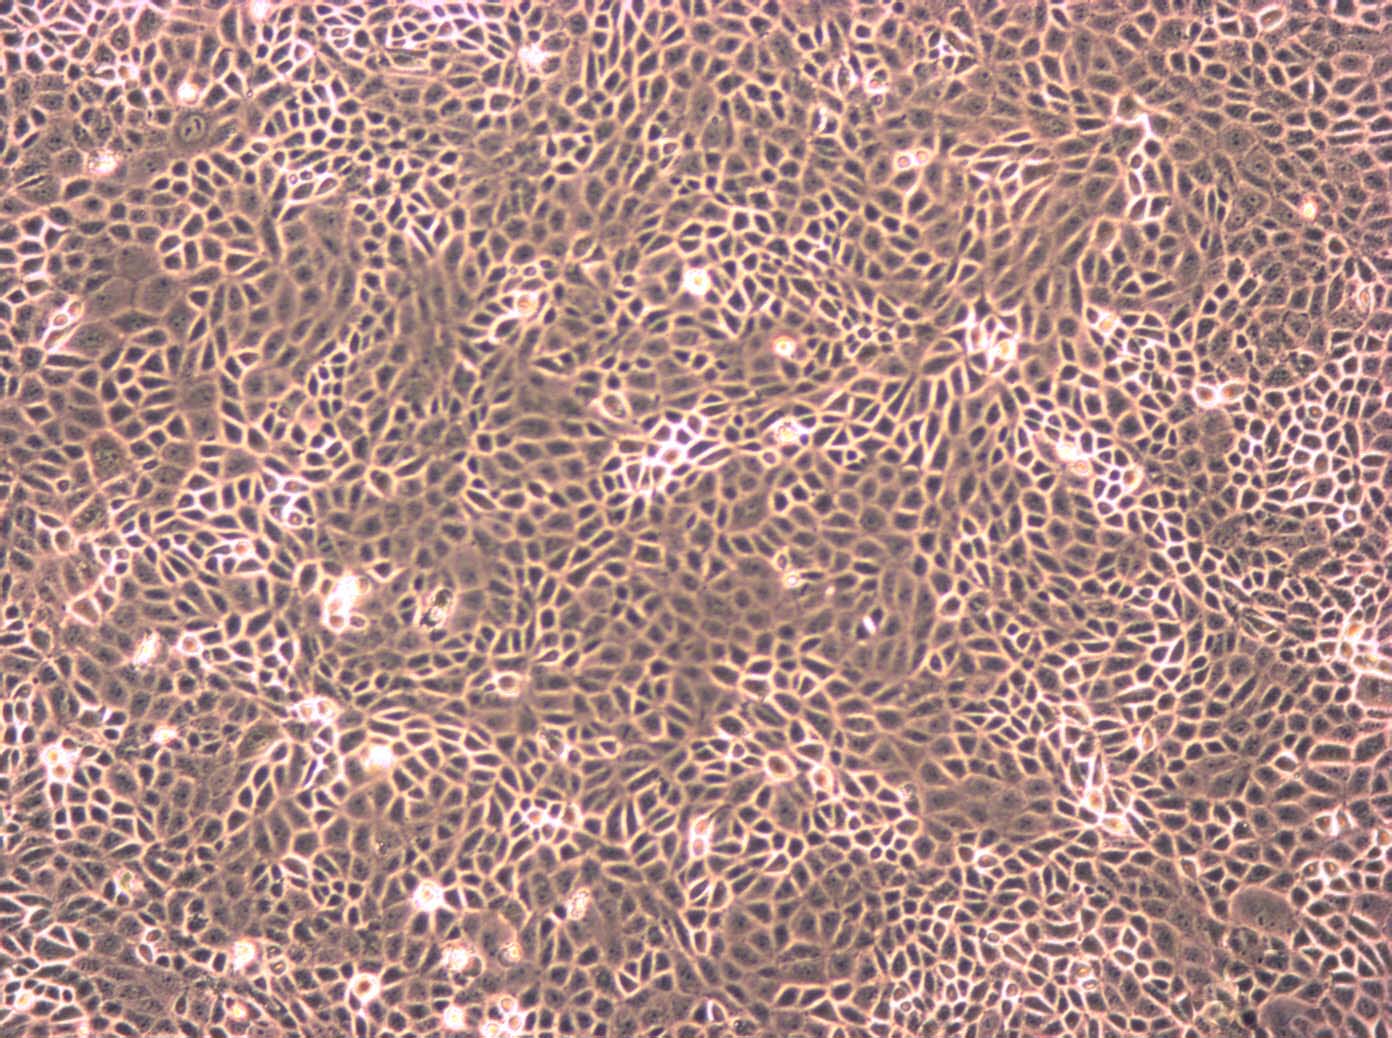 AN3-CA Cells|人子宫内膜腺癌需消化细胞系